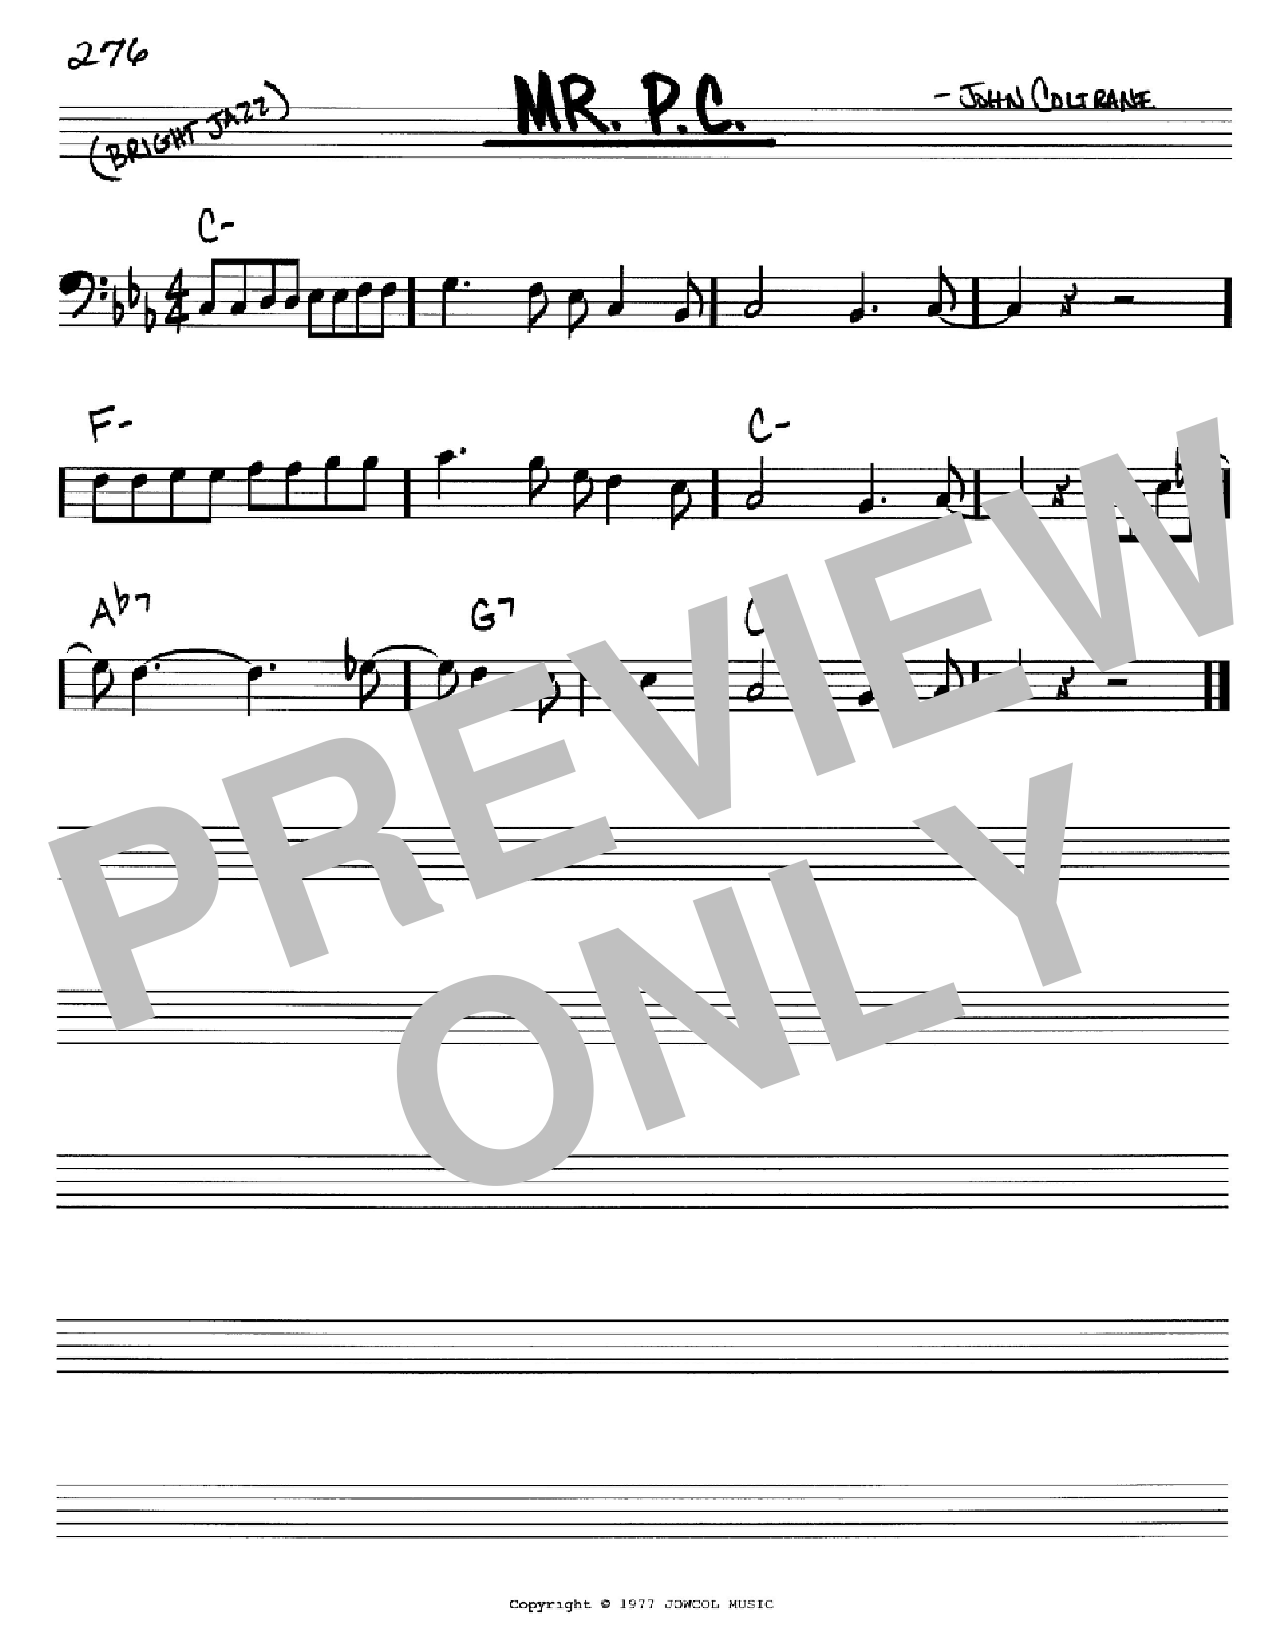 John Coltrane Mr. P.C. Sheet Music Notes & Chords for Solo Guitar Tab - Download or Print PDF